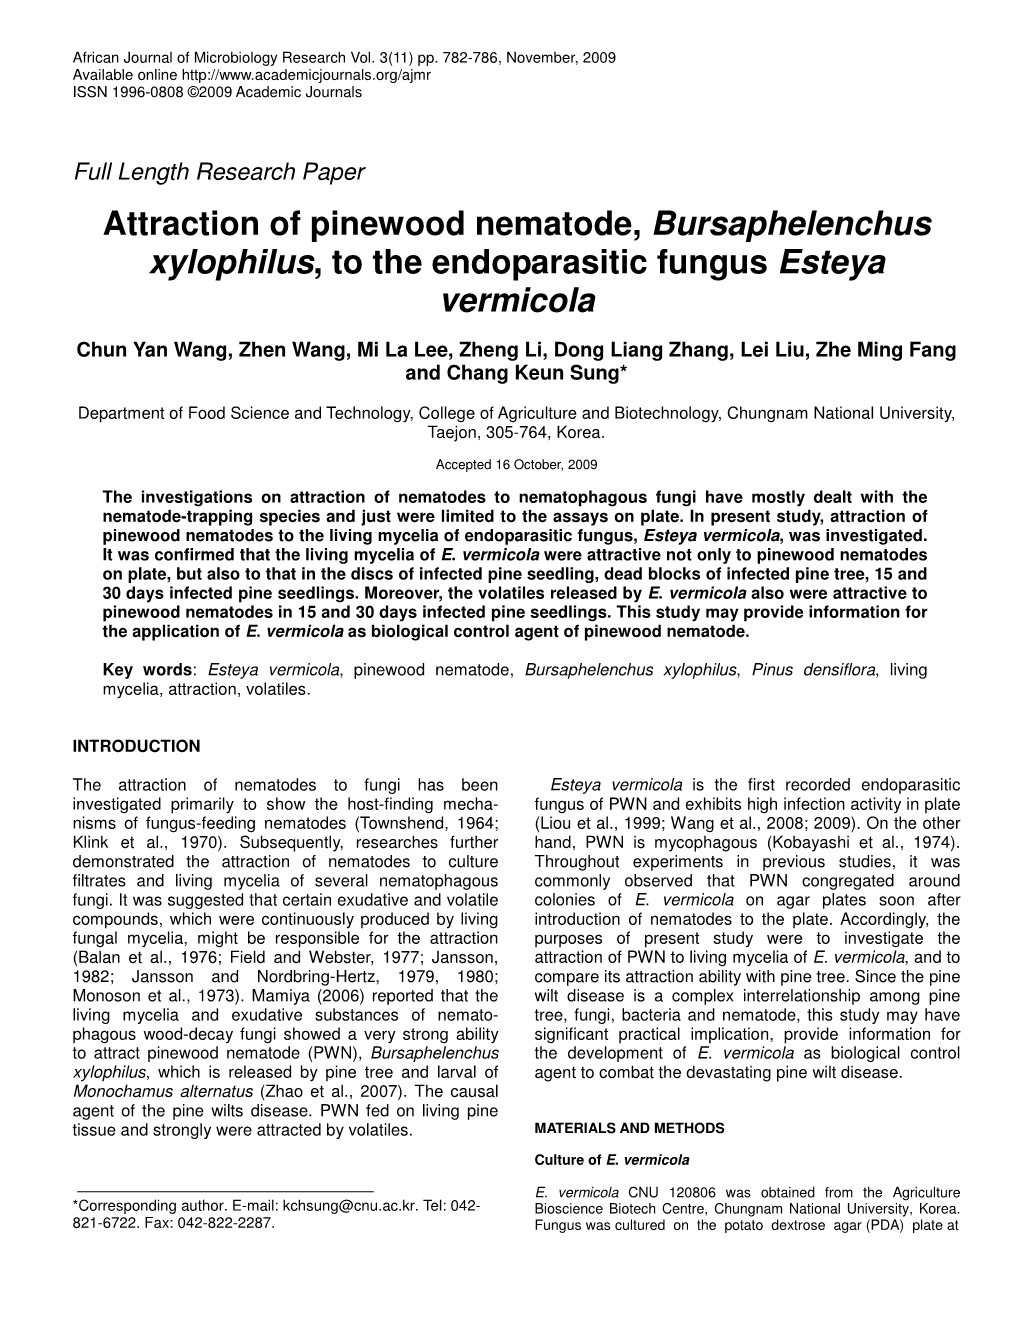 Attraction of Pinewood Nematode, Bursaphelenchus Xylophilus, to the Endoparasitic Fungus Esteya Vermicola